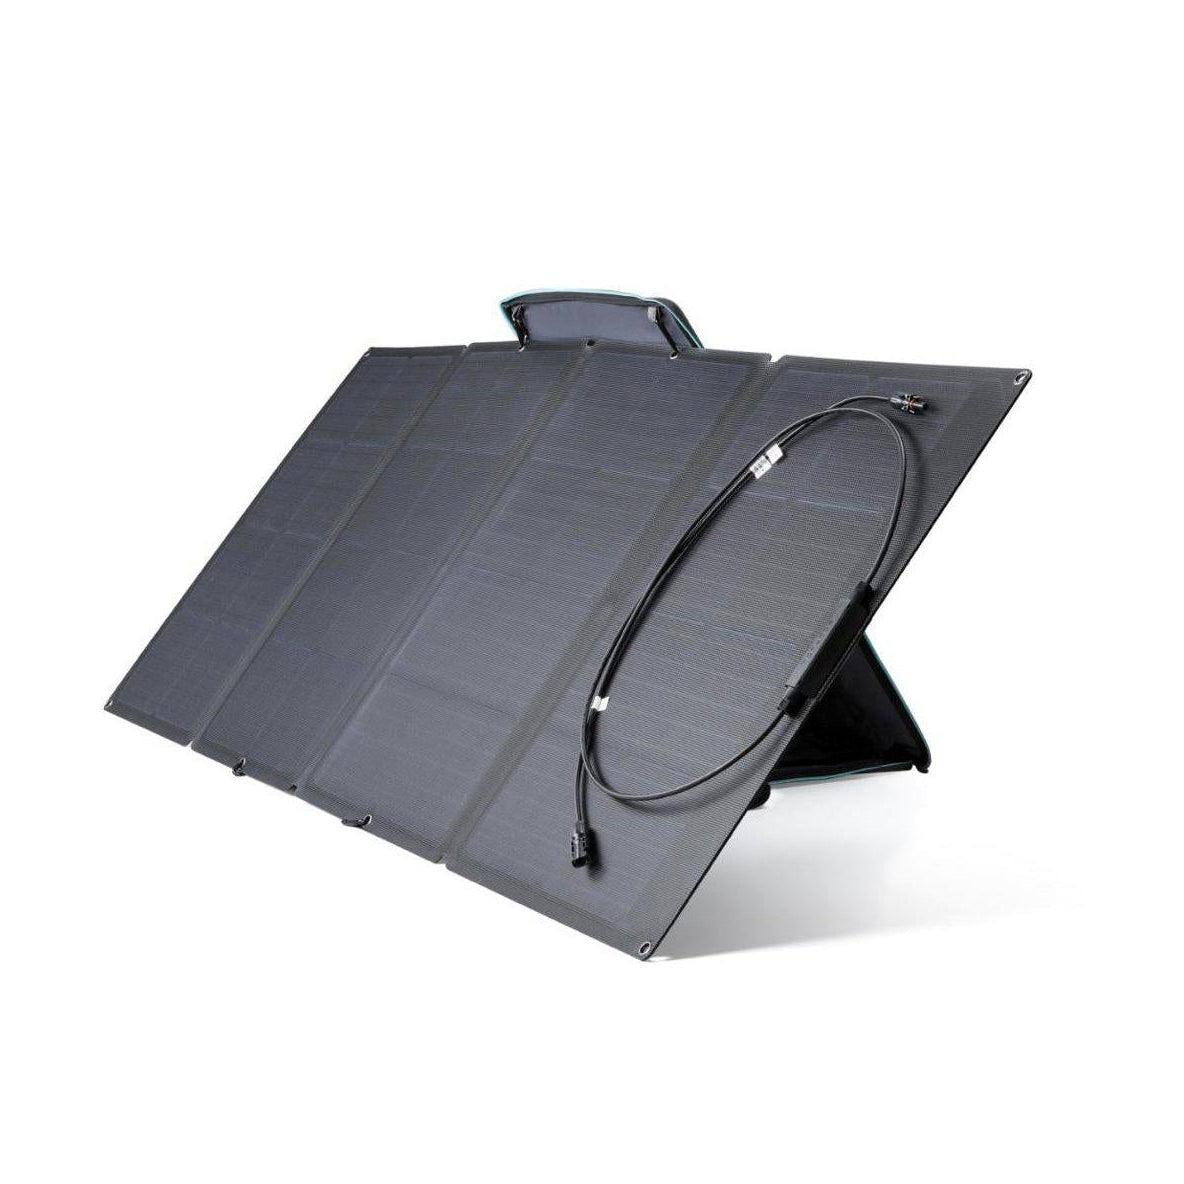 EcoFlow EcoFlow 160W Foldable Solar Panel - eBike Haul